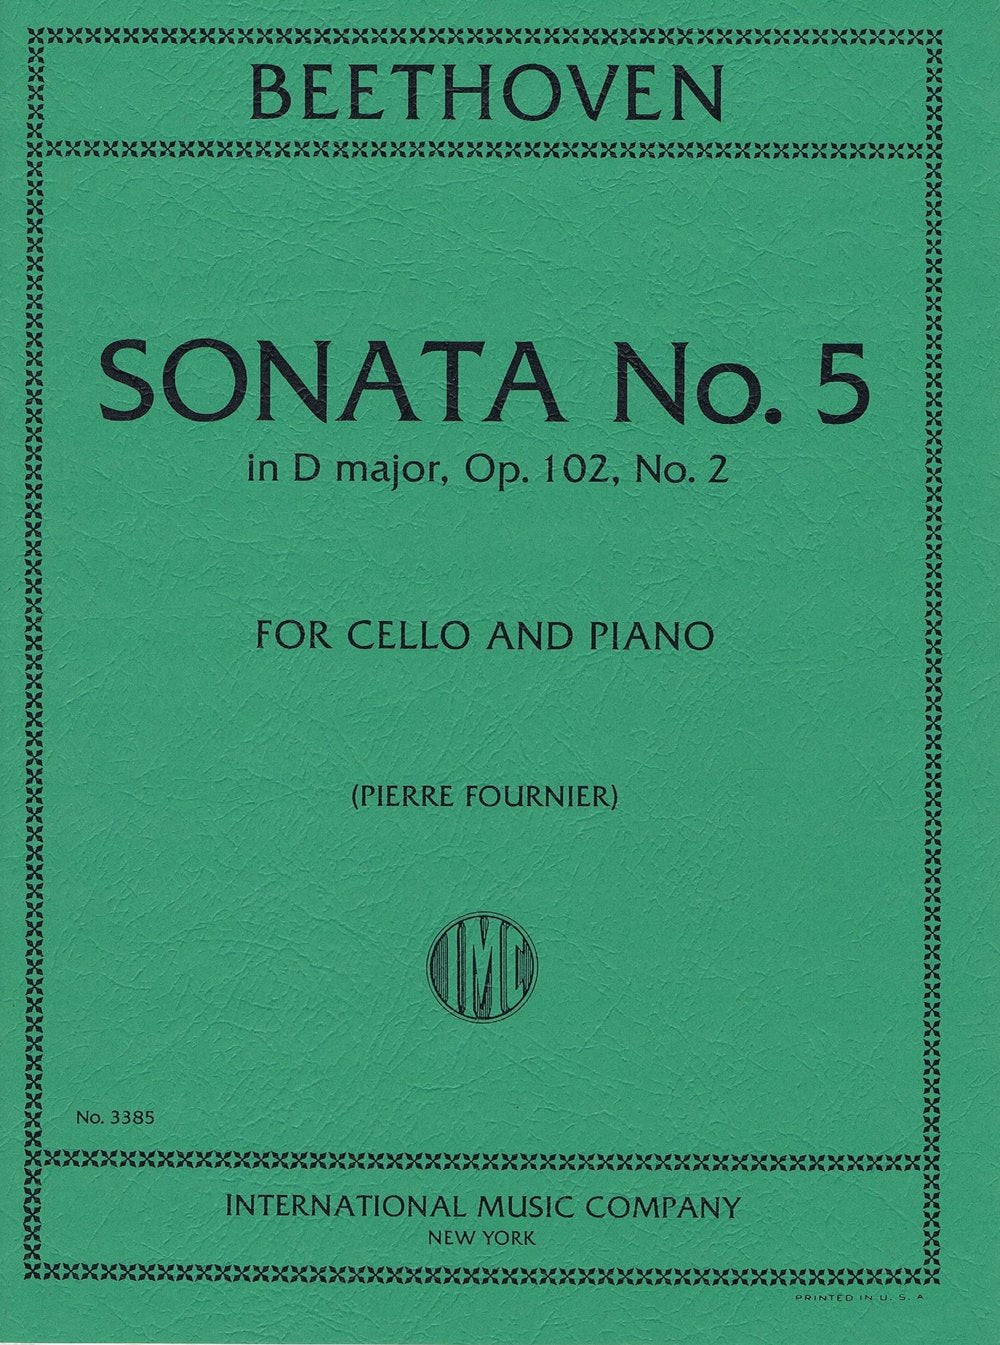 IMC Beethoven Sonata No.5 in D major No.3385